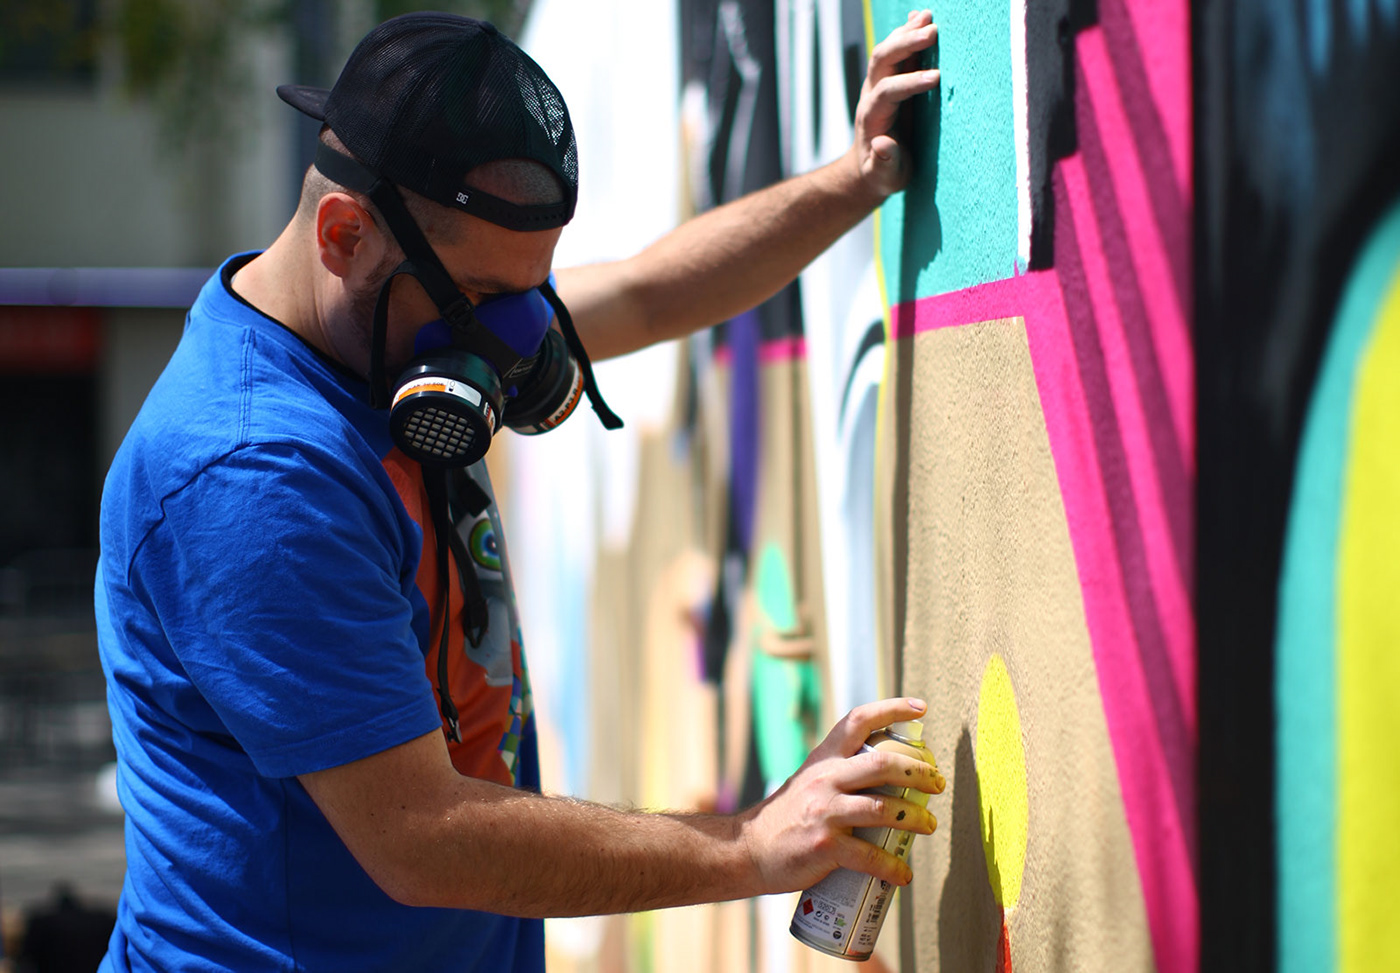 Street Art  live painting video Mural art arte urbano urban art Mix media Graffiti contemporary art